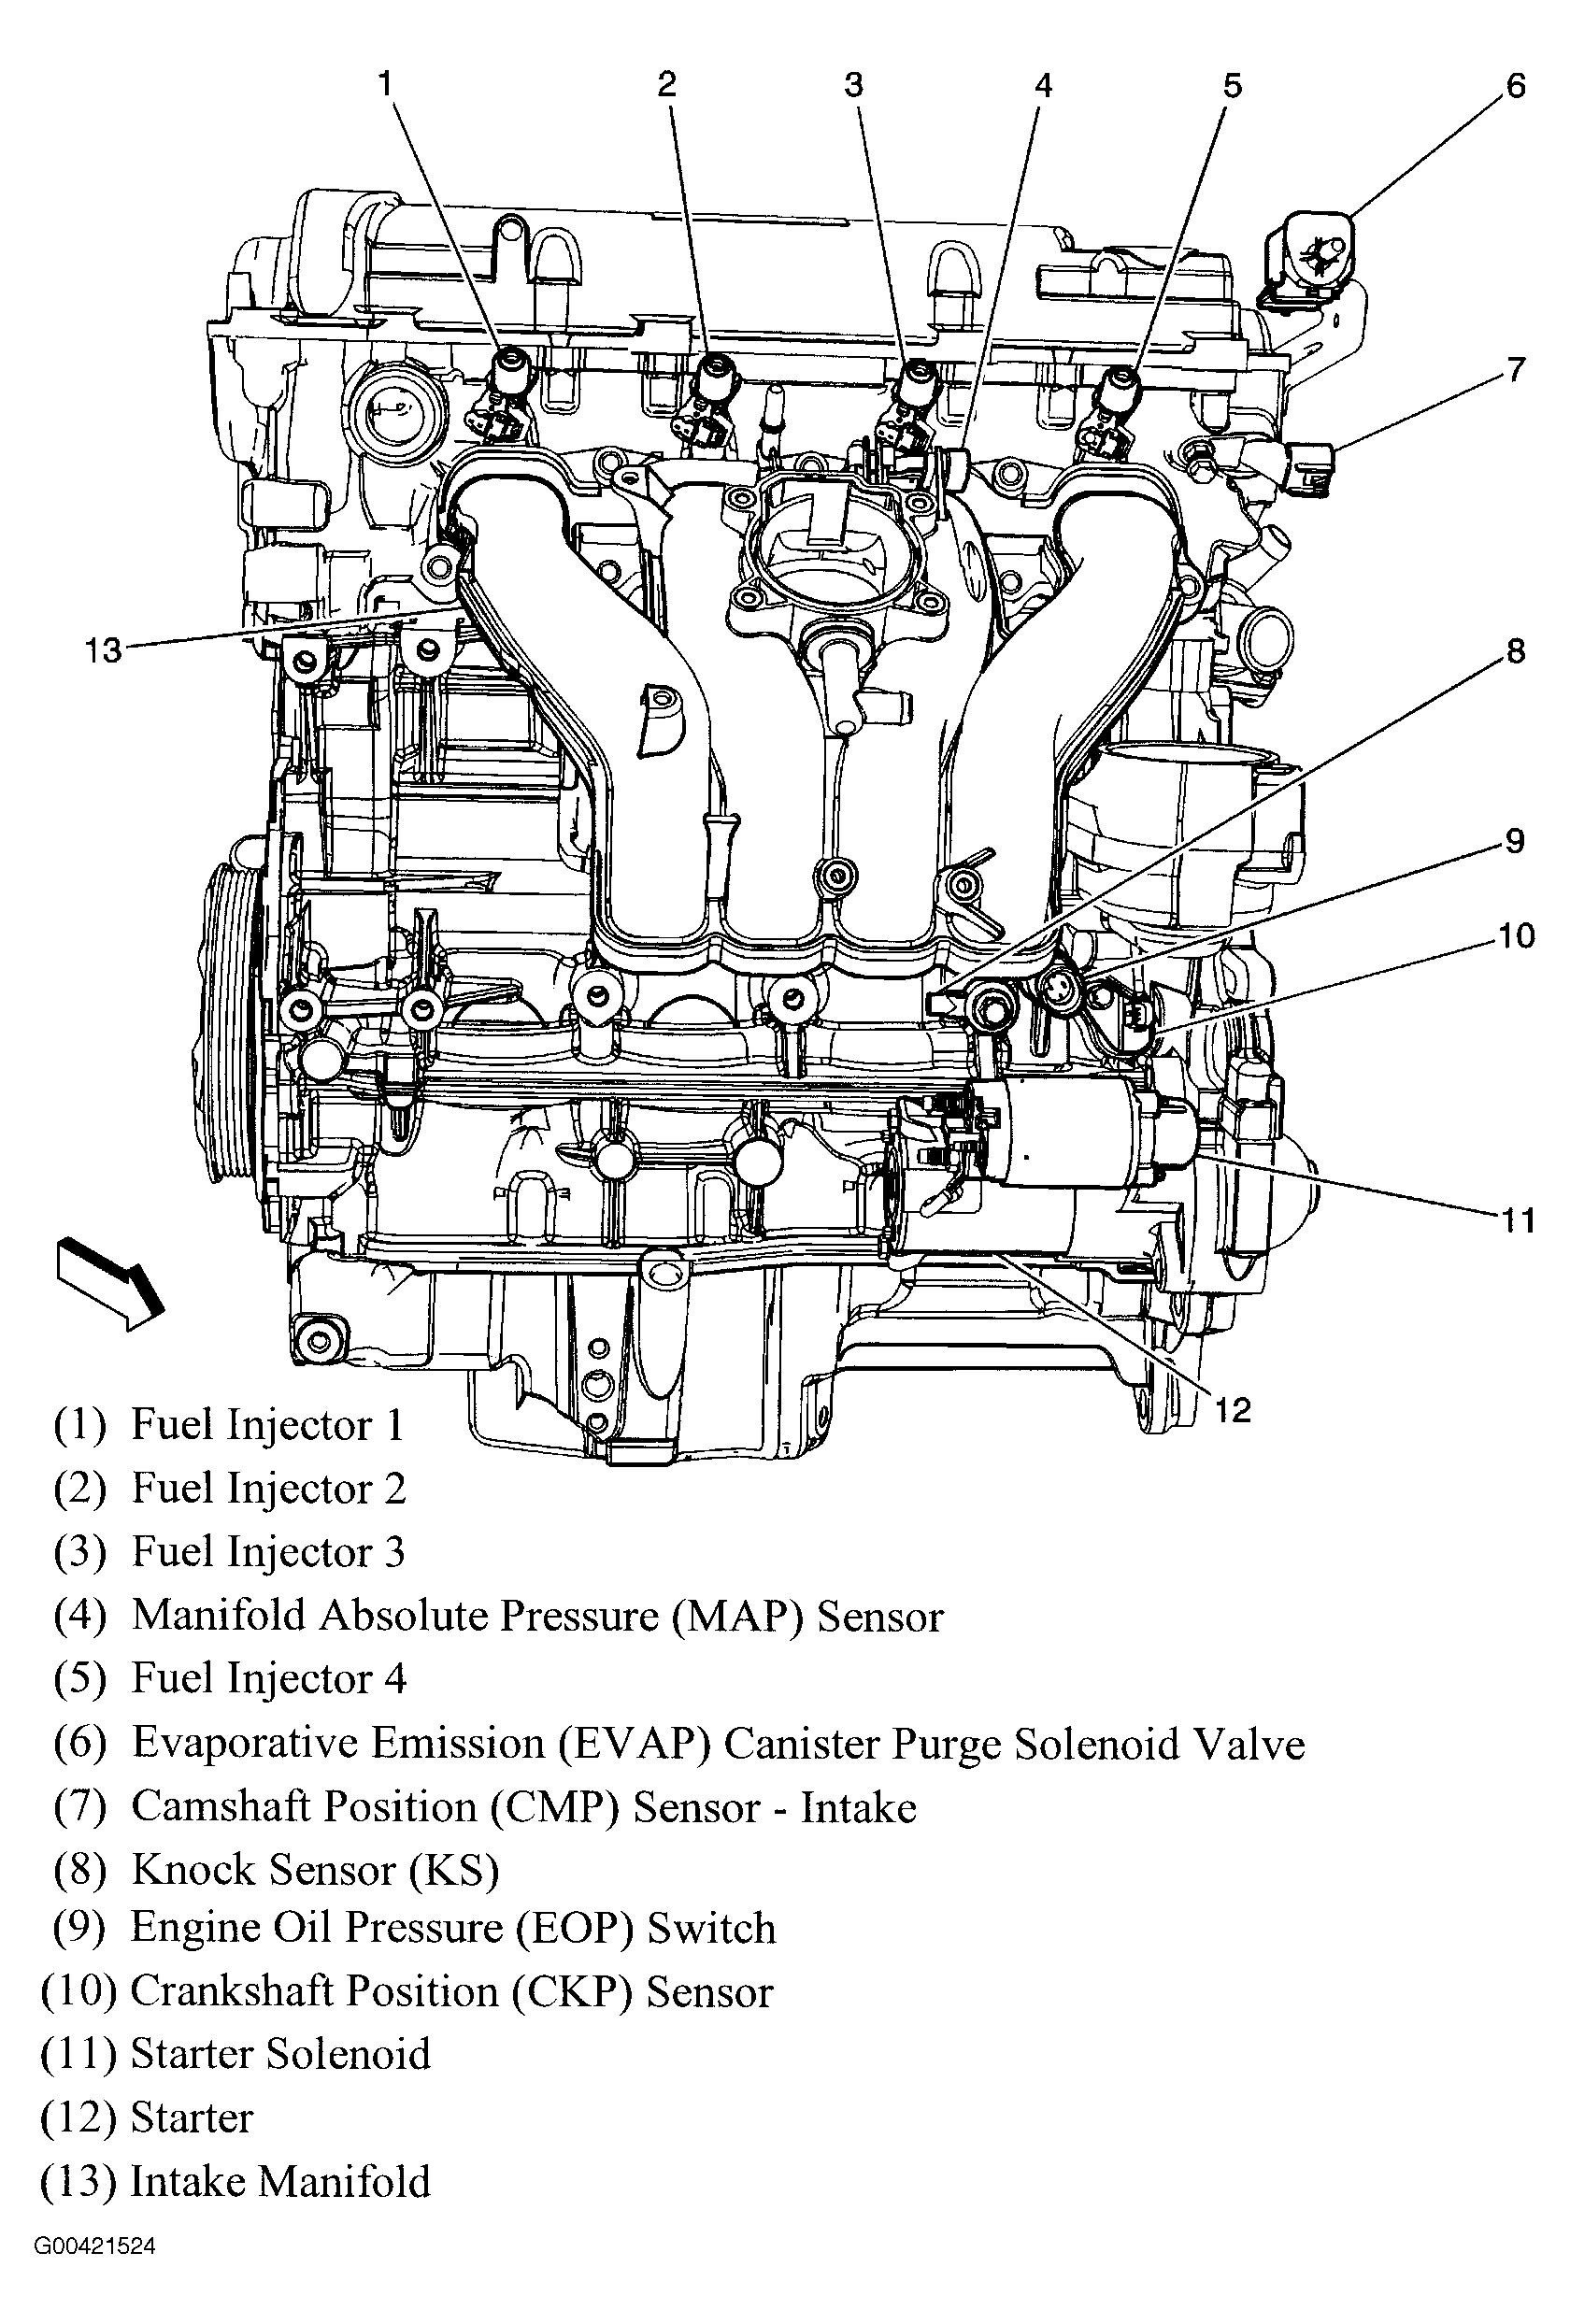 98 Chevy Blazer Engine Diagram Chevy 3500 Engine Diagram Wiring Diagram 500 Of 98 Chevy Blazer Engine Diagram